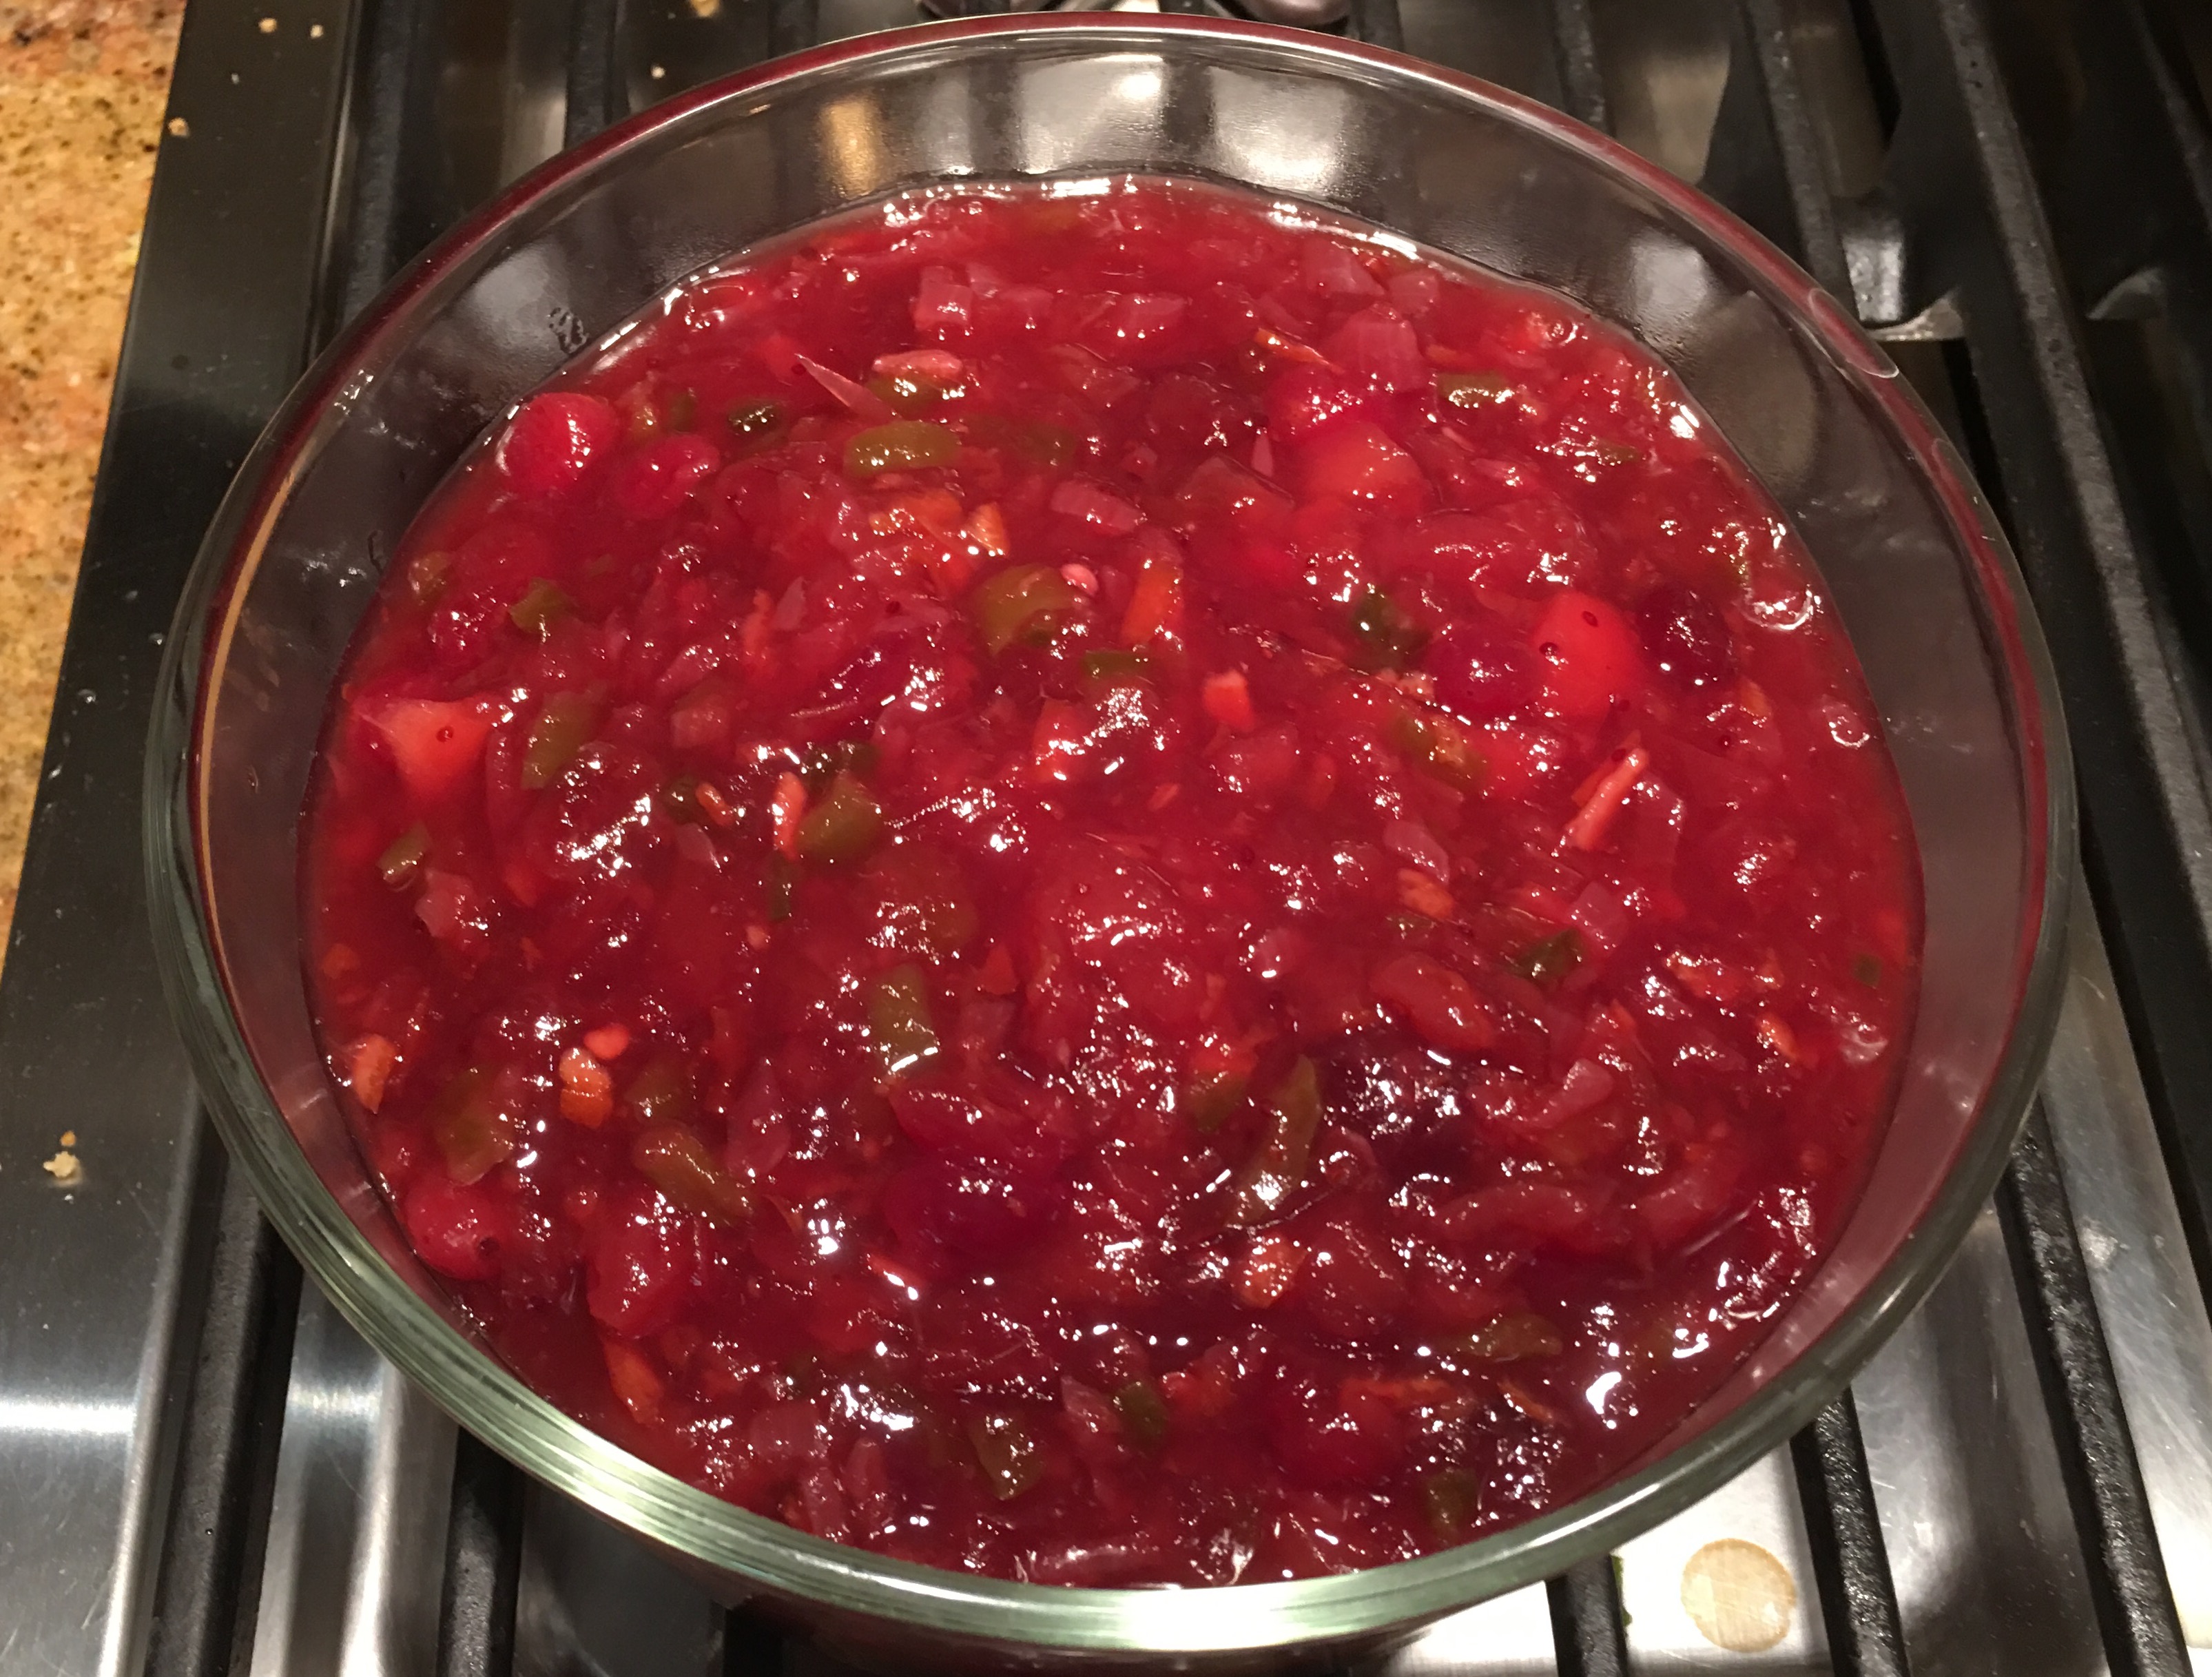 Spicy Cranberry Sauce Recipe